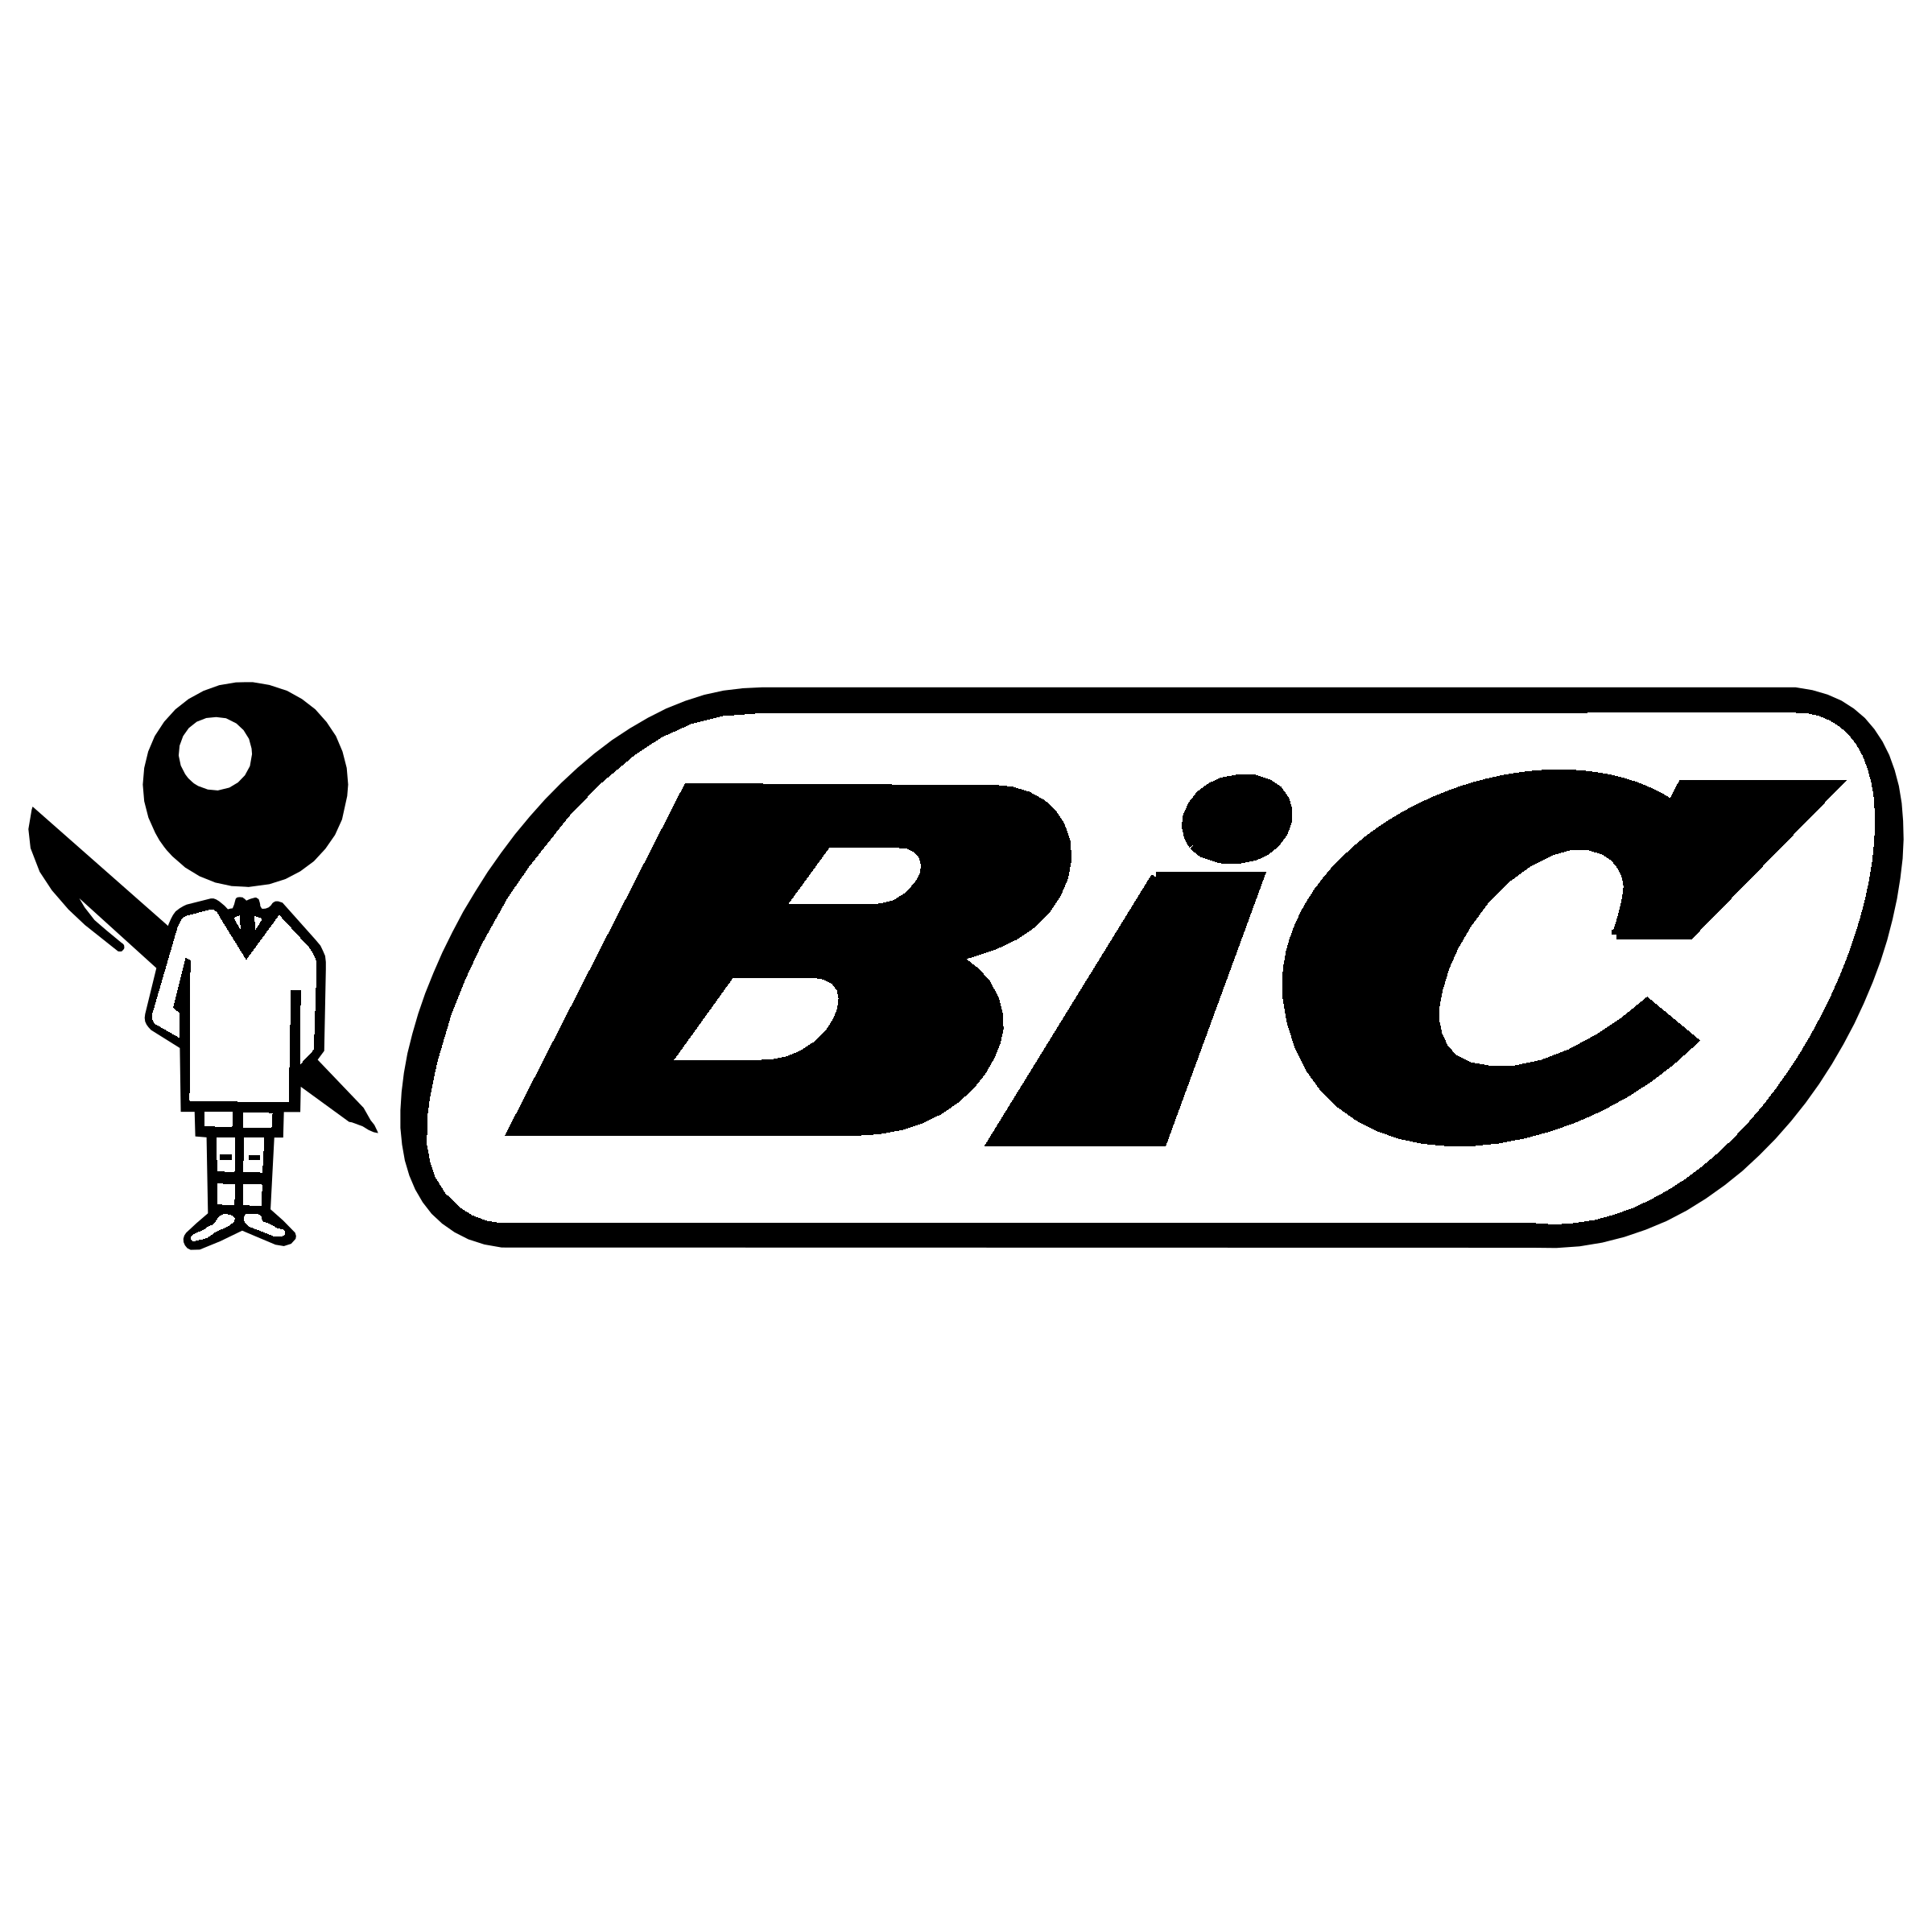 bic-logo-black-and-white